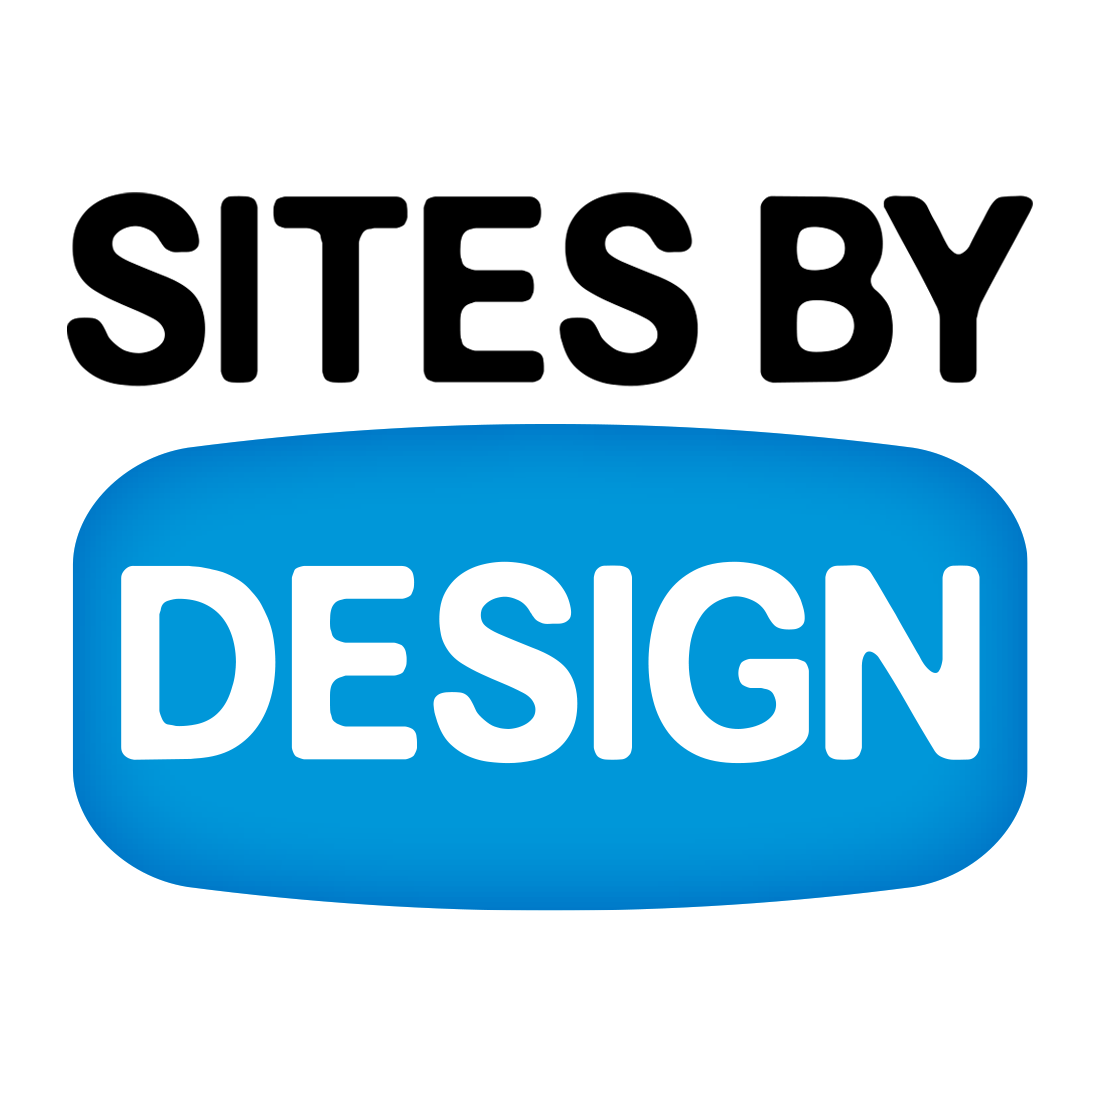 Sites By Design Logo